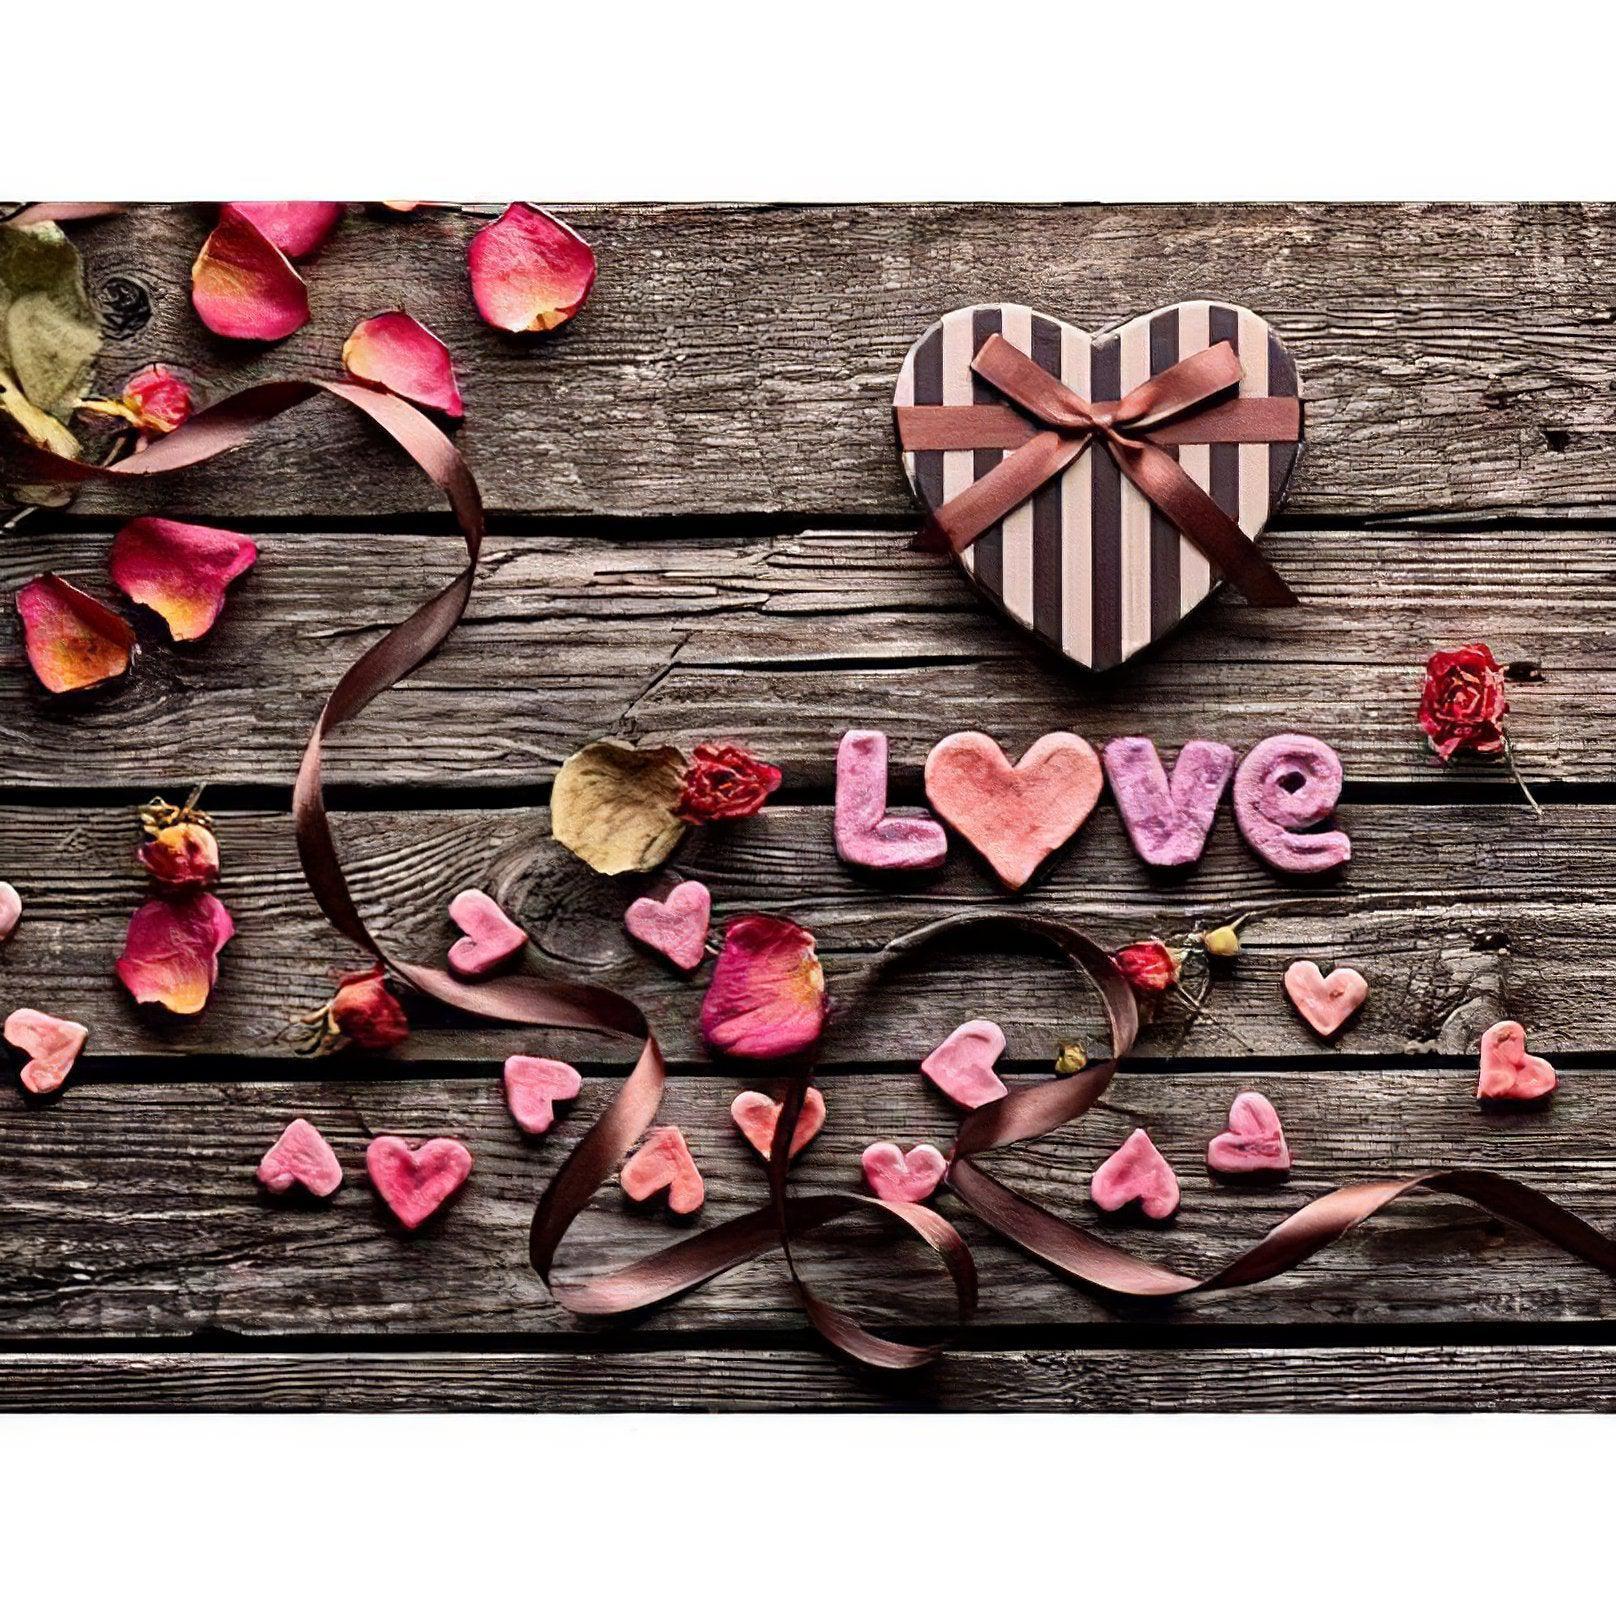 Express romance with the enchanting Love Petals artwork. Love Petals - Diamondartlove